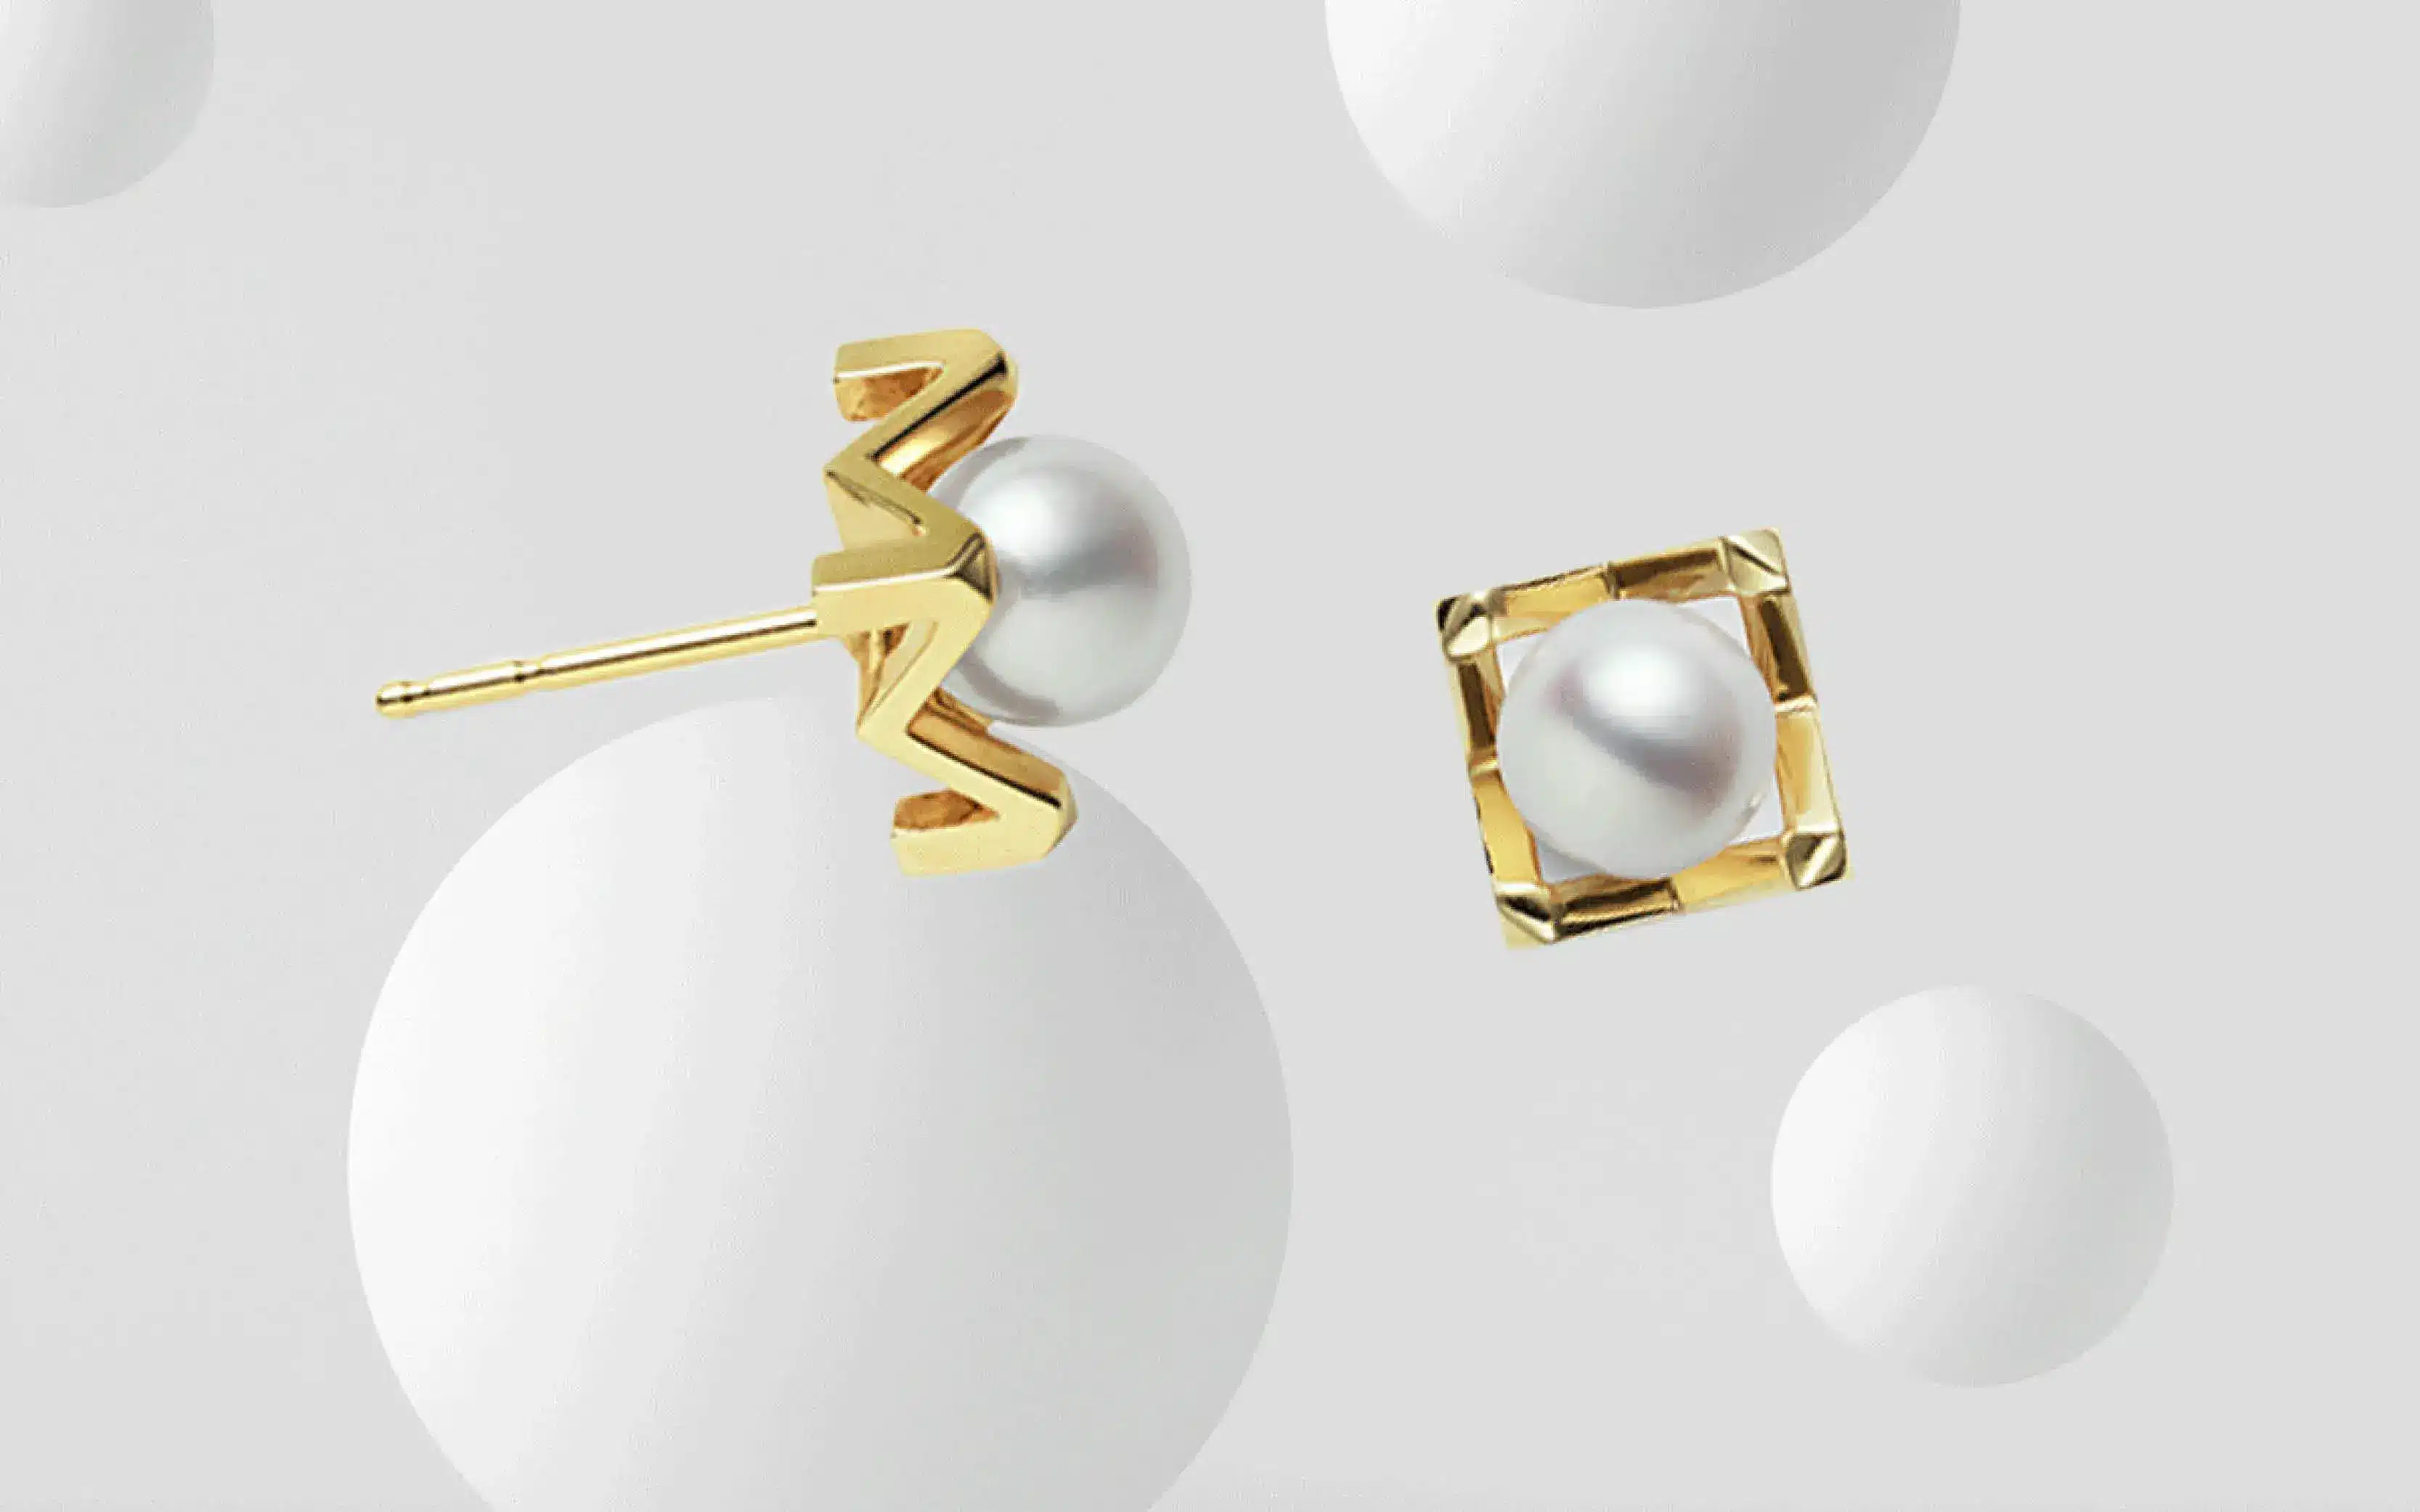 Mikimoto pearl 30th wedding anniversary gifts